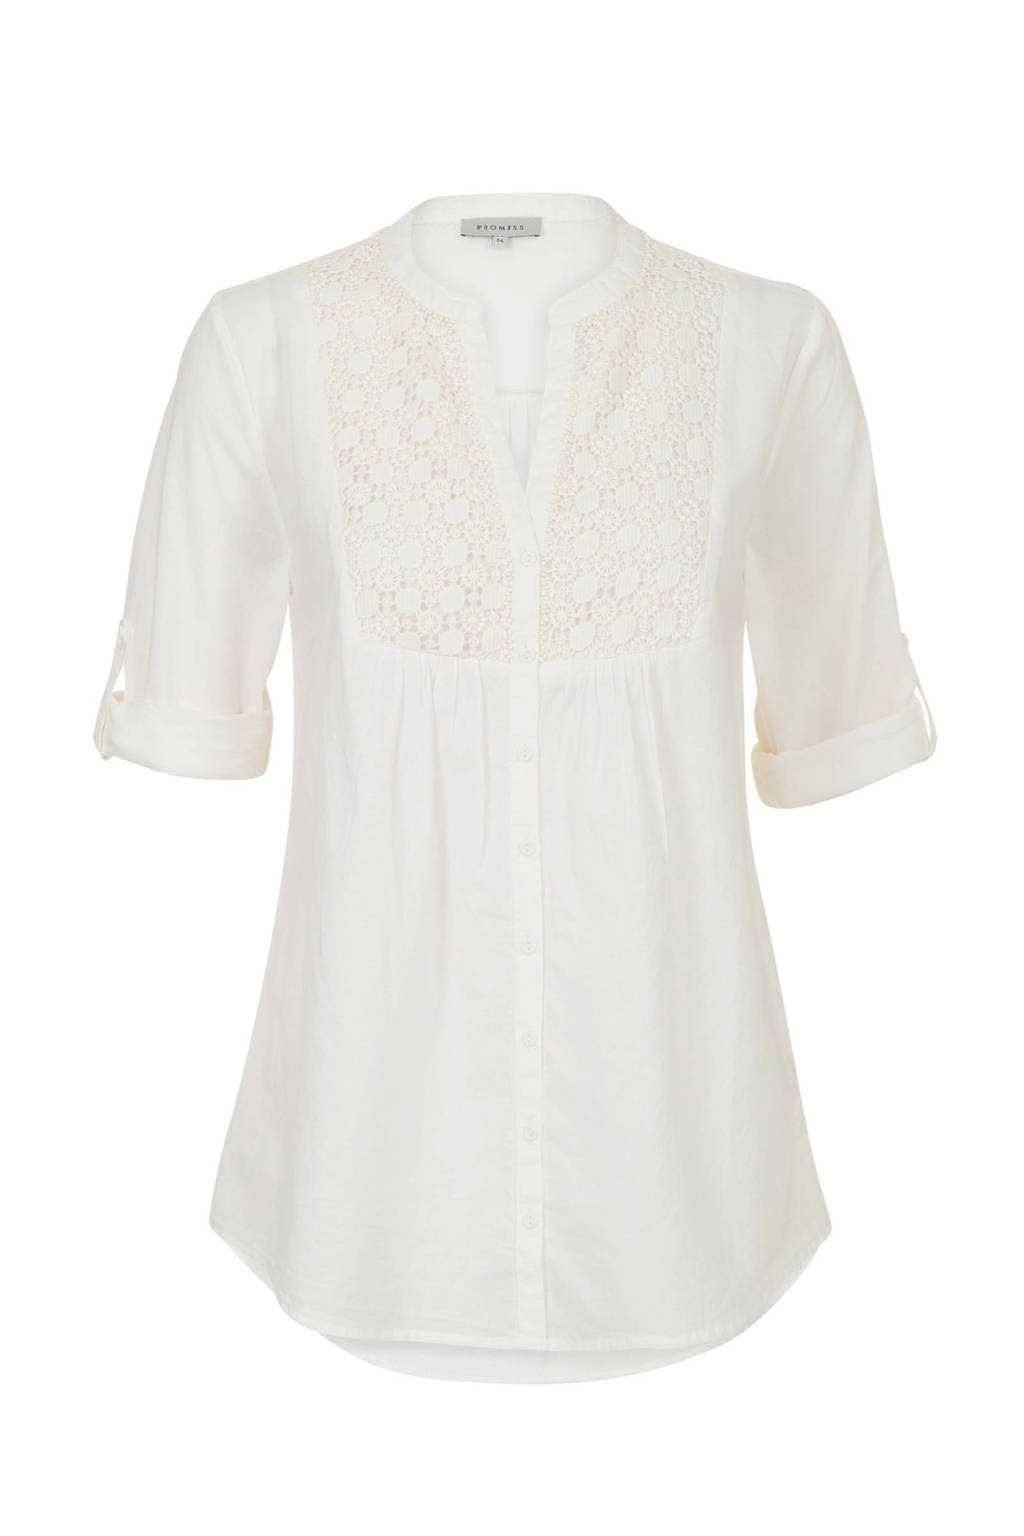 Onwijs PROMISS blouse met kant wit | wehkamp VL-67